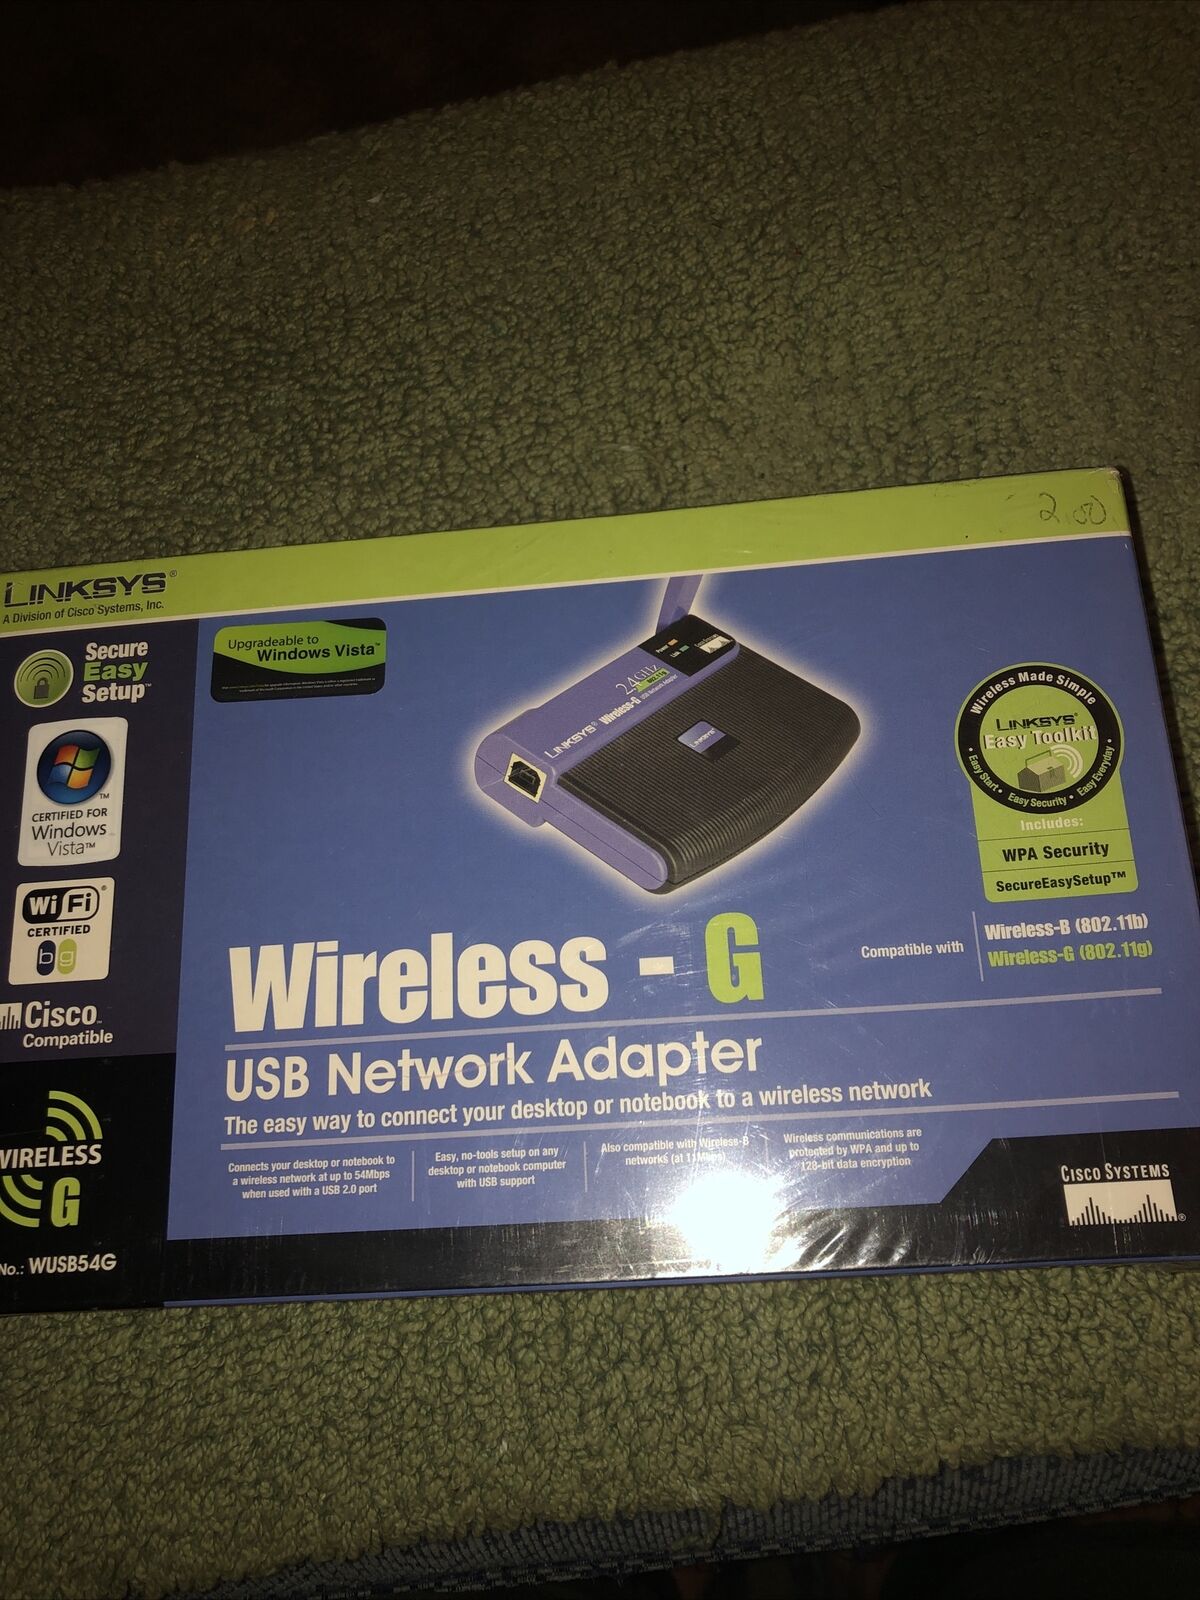 LINKSYS CISCO WIRELESS-G USB NETWORK ADAPTER WUSB54G 2.4Ghz 802.11g NEW SEALED